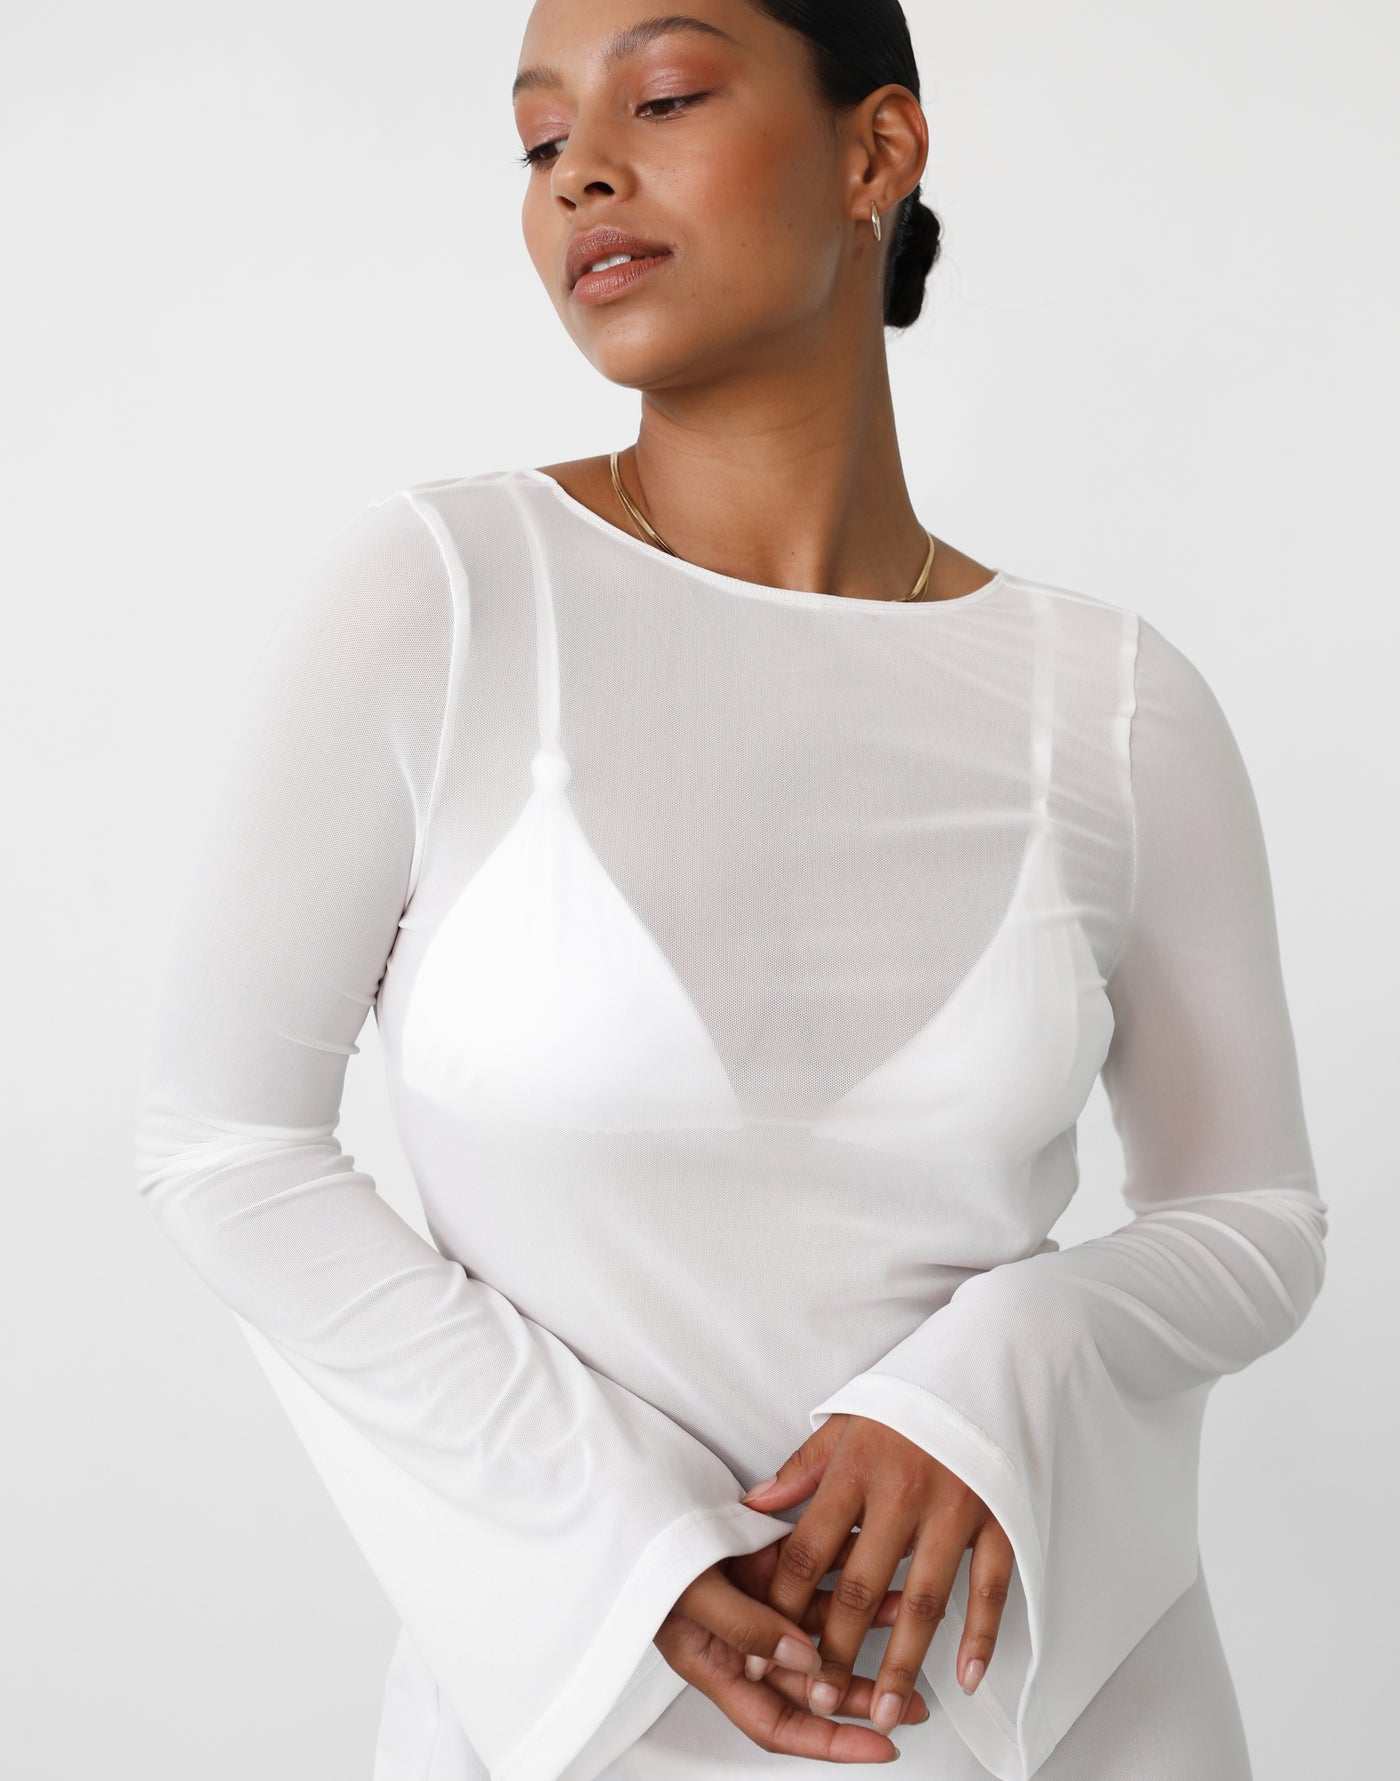 Make Waves Mini Dress (White) - Sheer Open Back Dress - Women's Dress - Charcoal Clothing